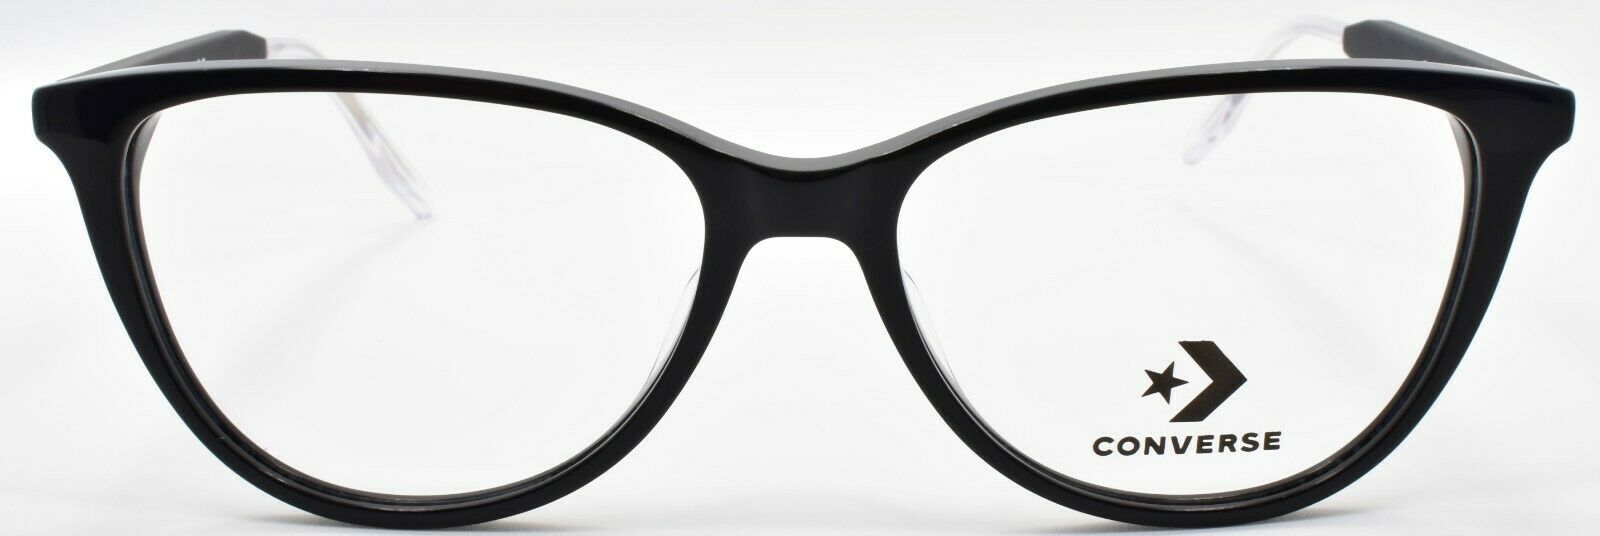 2-CONVERSE CV5004 001 Women's Eyeglasses Frames Cat Eye 52-15-140 Black-886895506571-IKSpecs